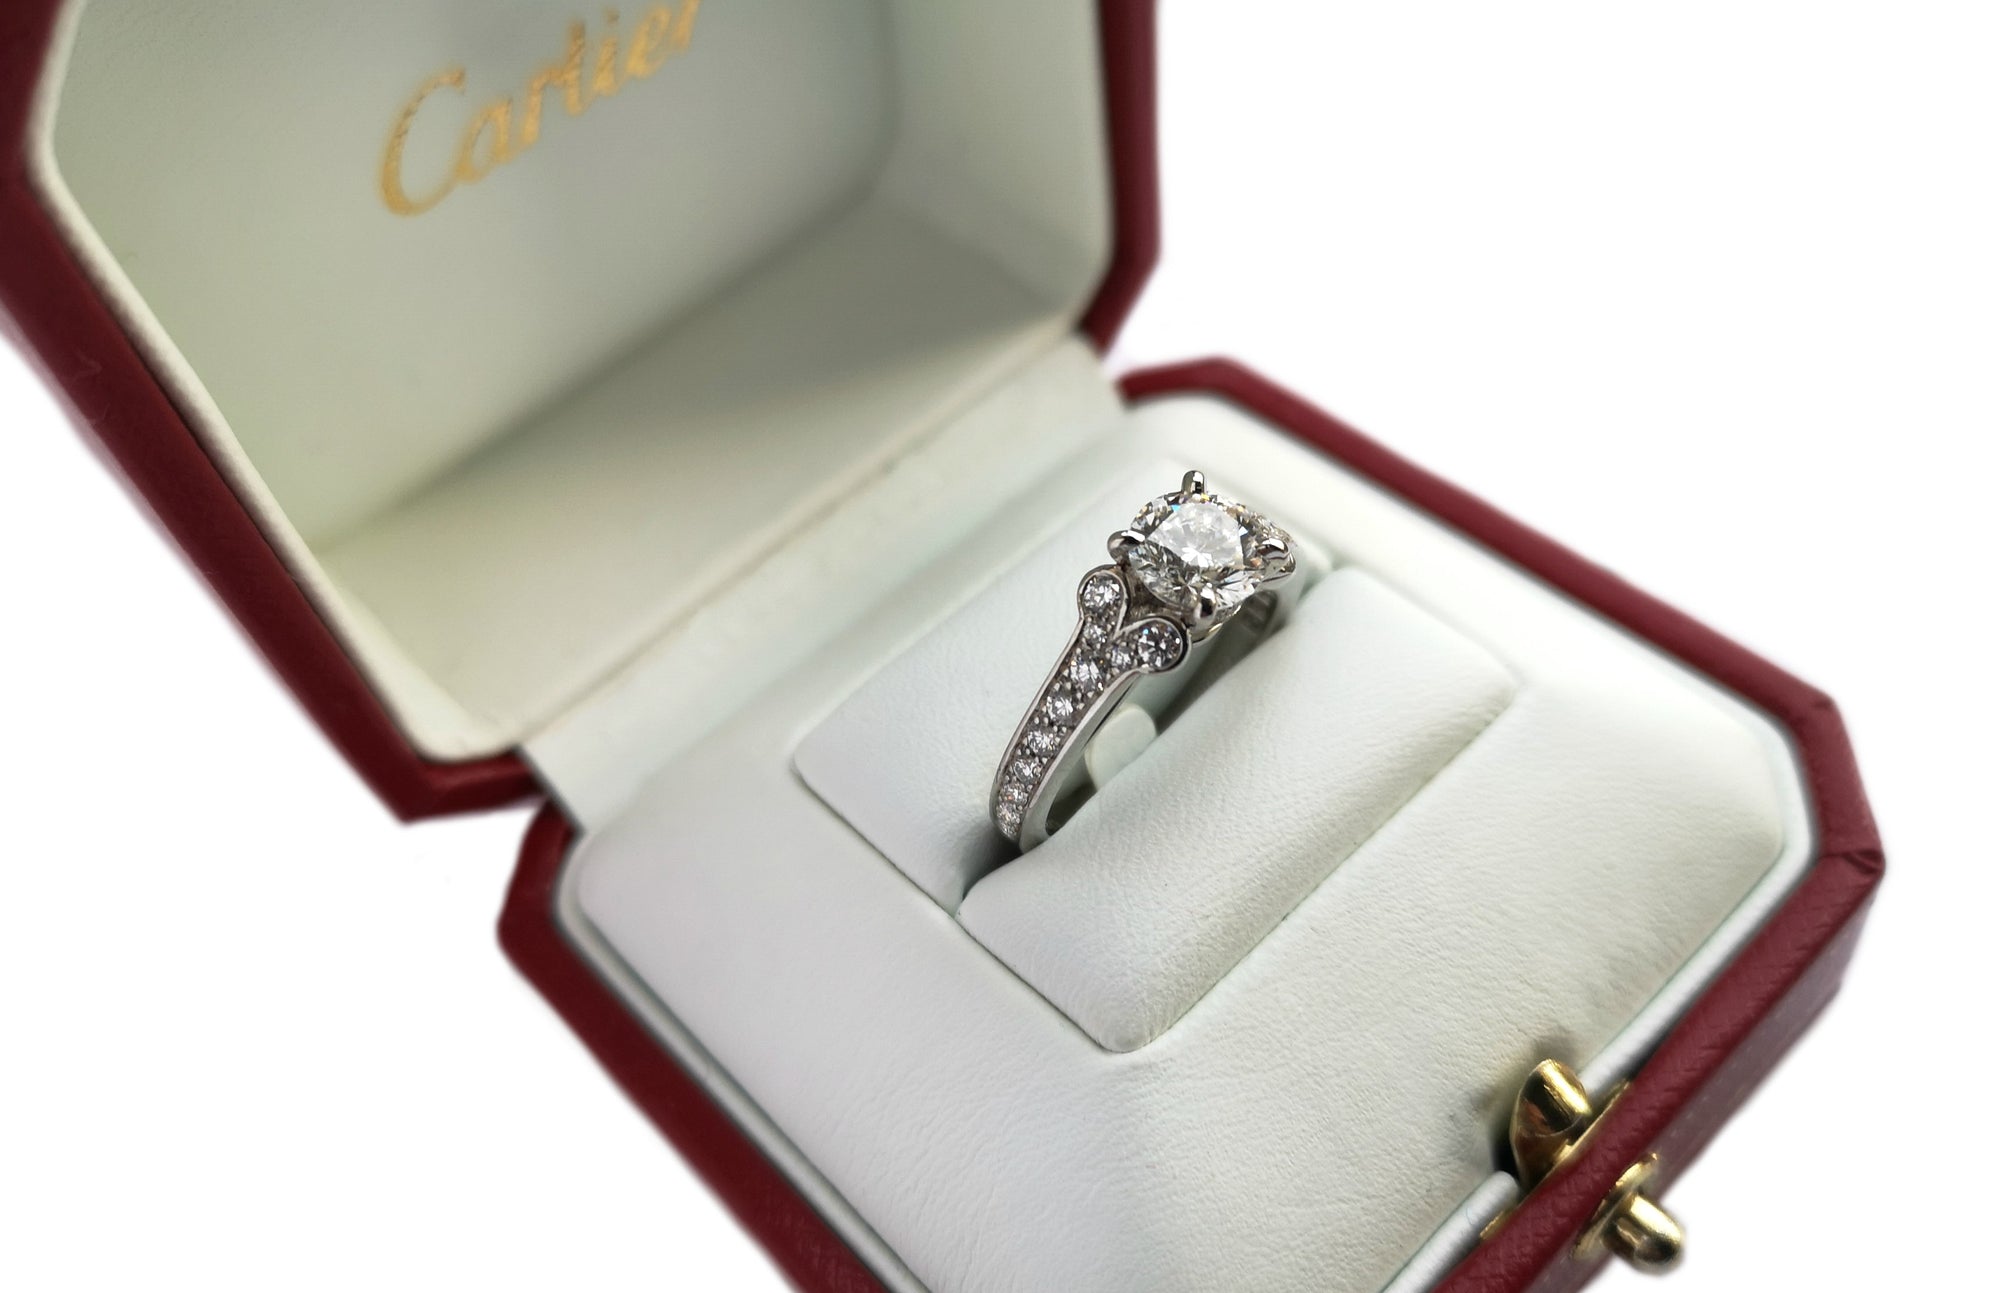 Cartier 1.18ct E/VVS1 Triple XXX Ballerine Round Brilliant Diamond Engagement Ring